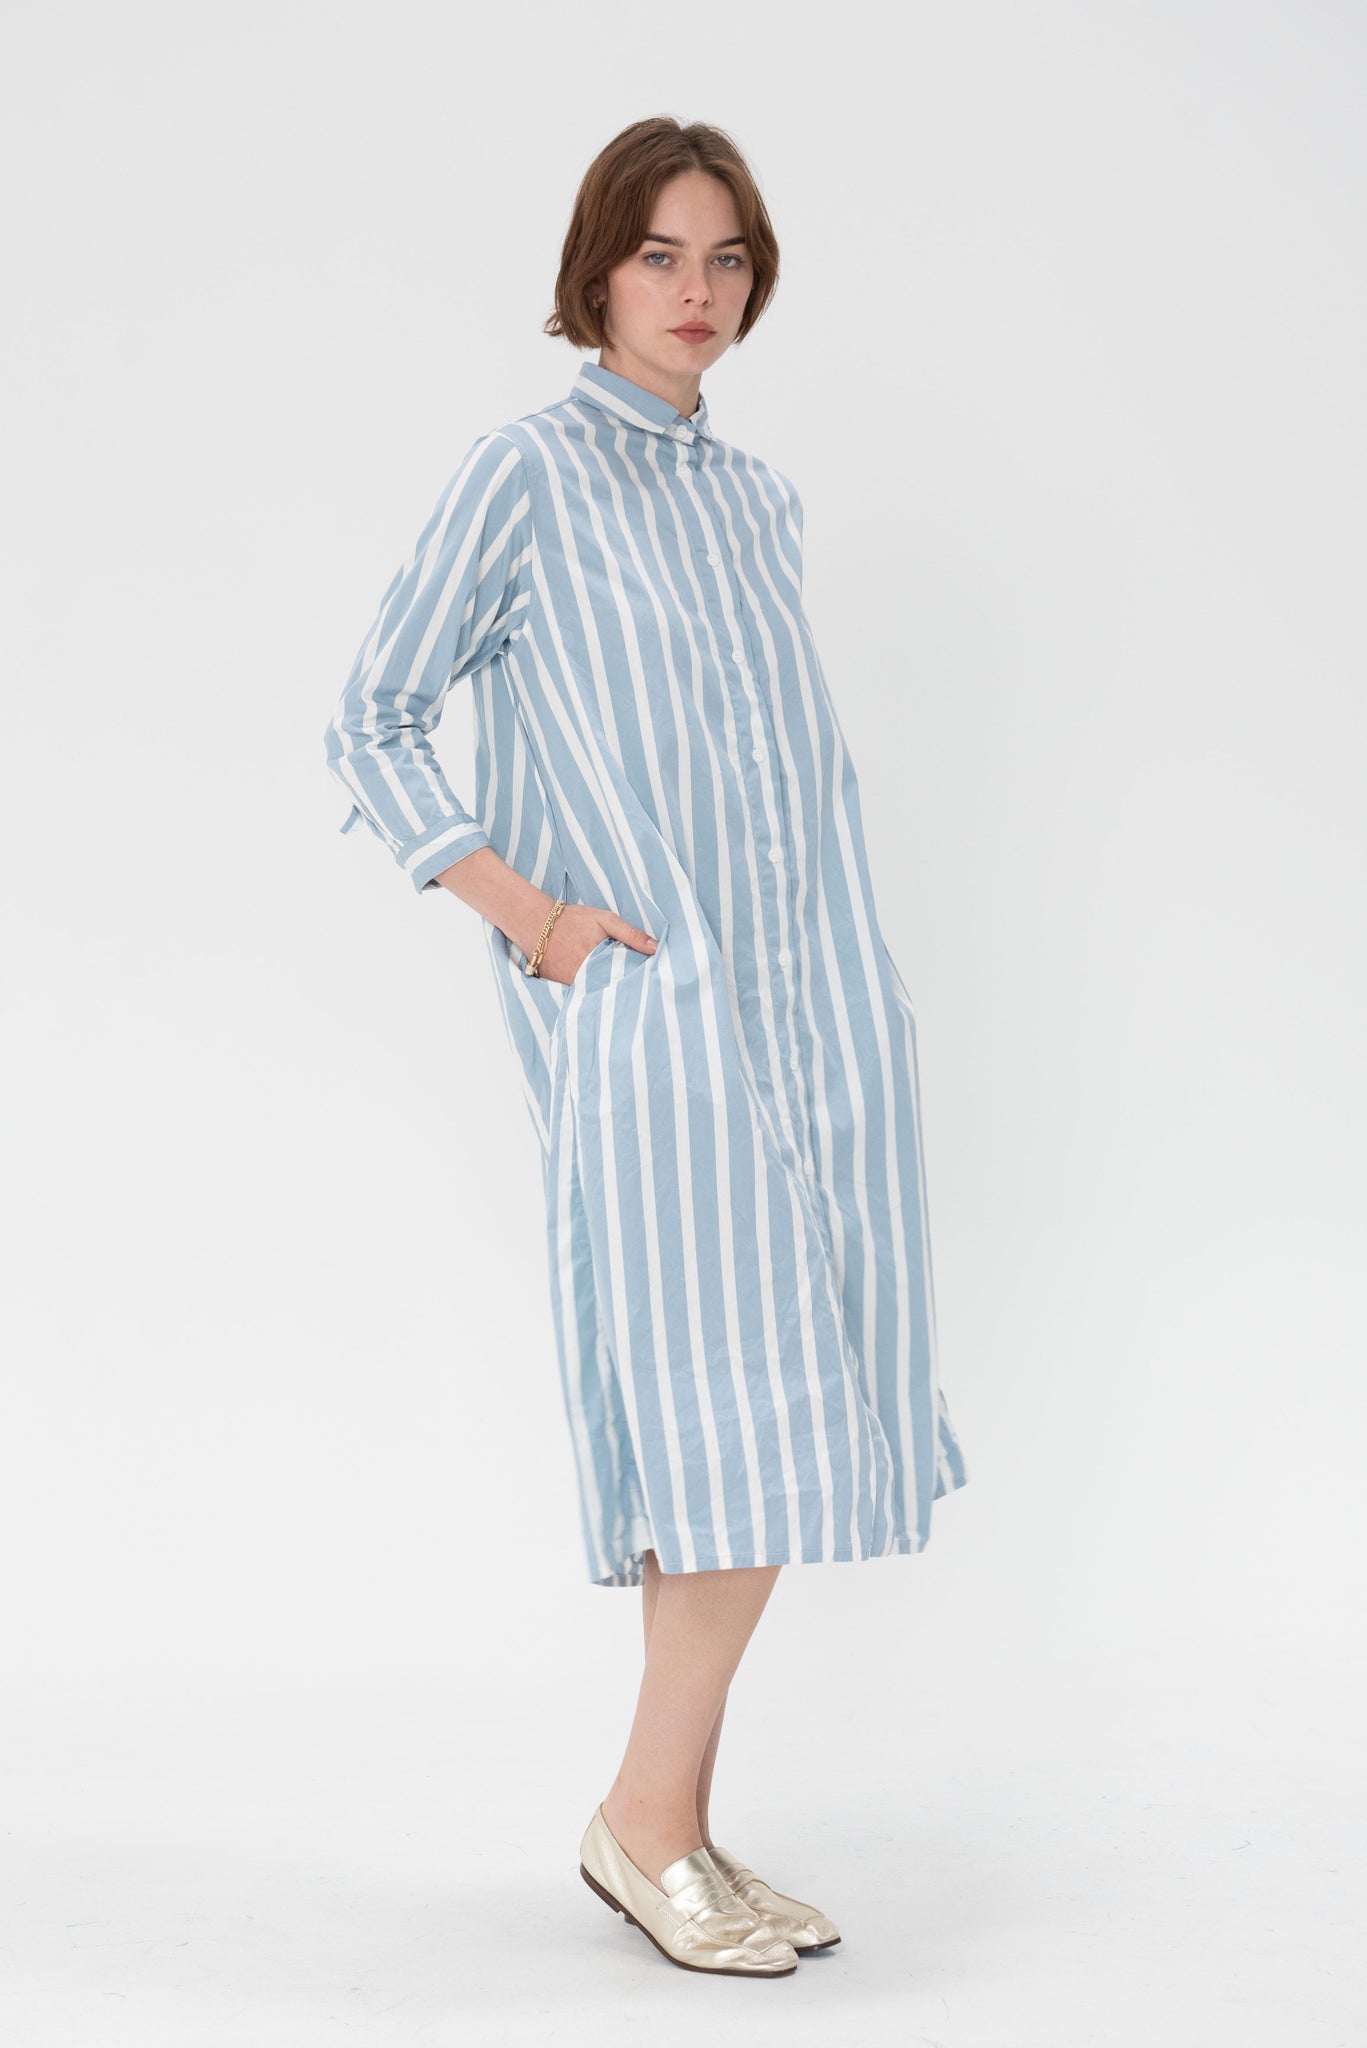 BERGFABEL - Shirt Dress, Big Blue Stripe